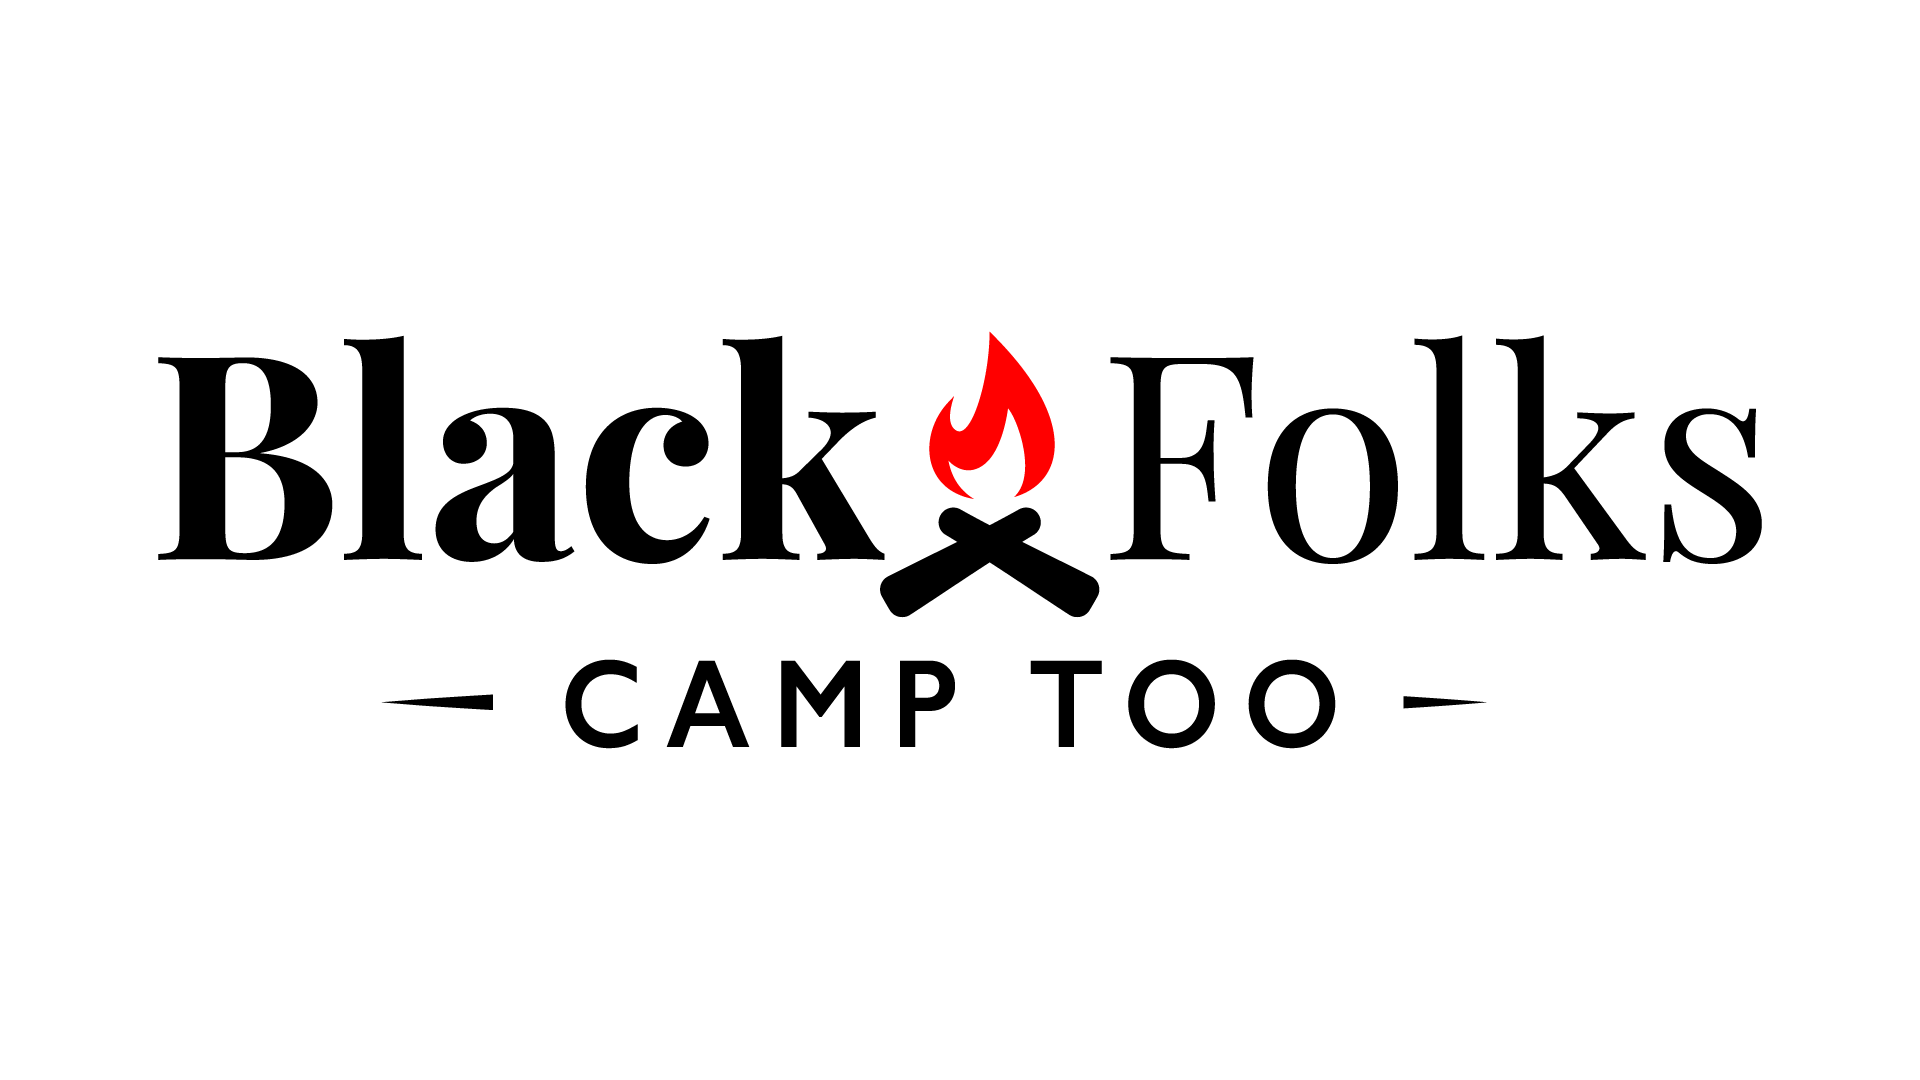 Black Folks Camp Too logo.